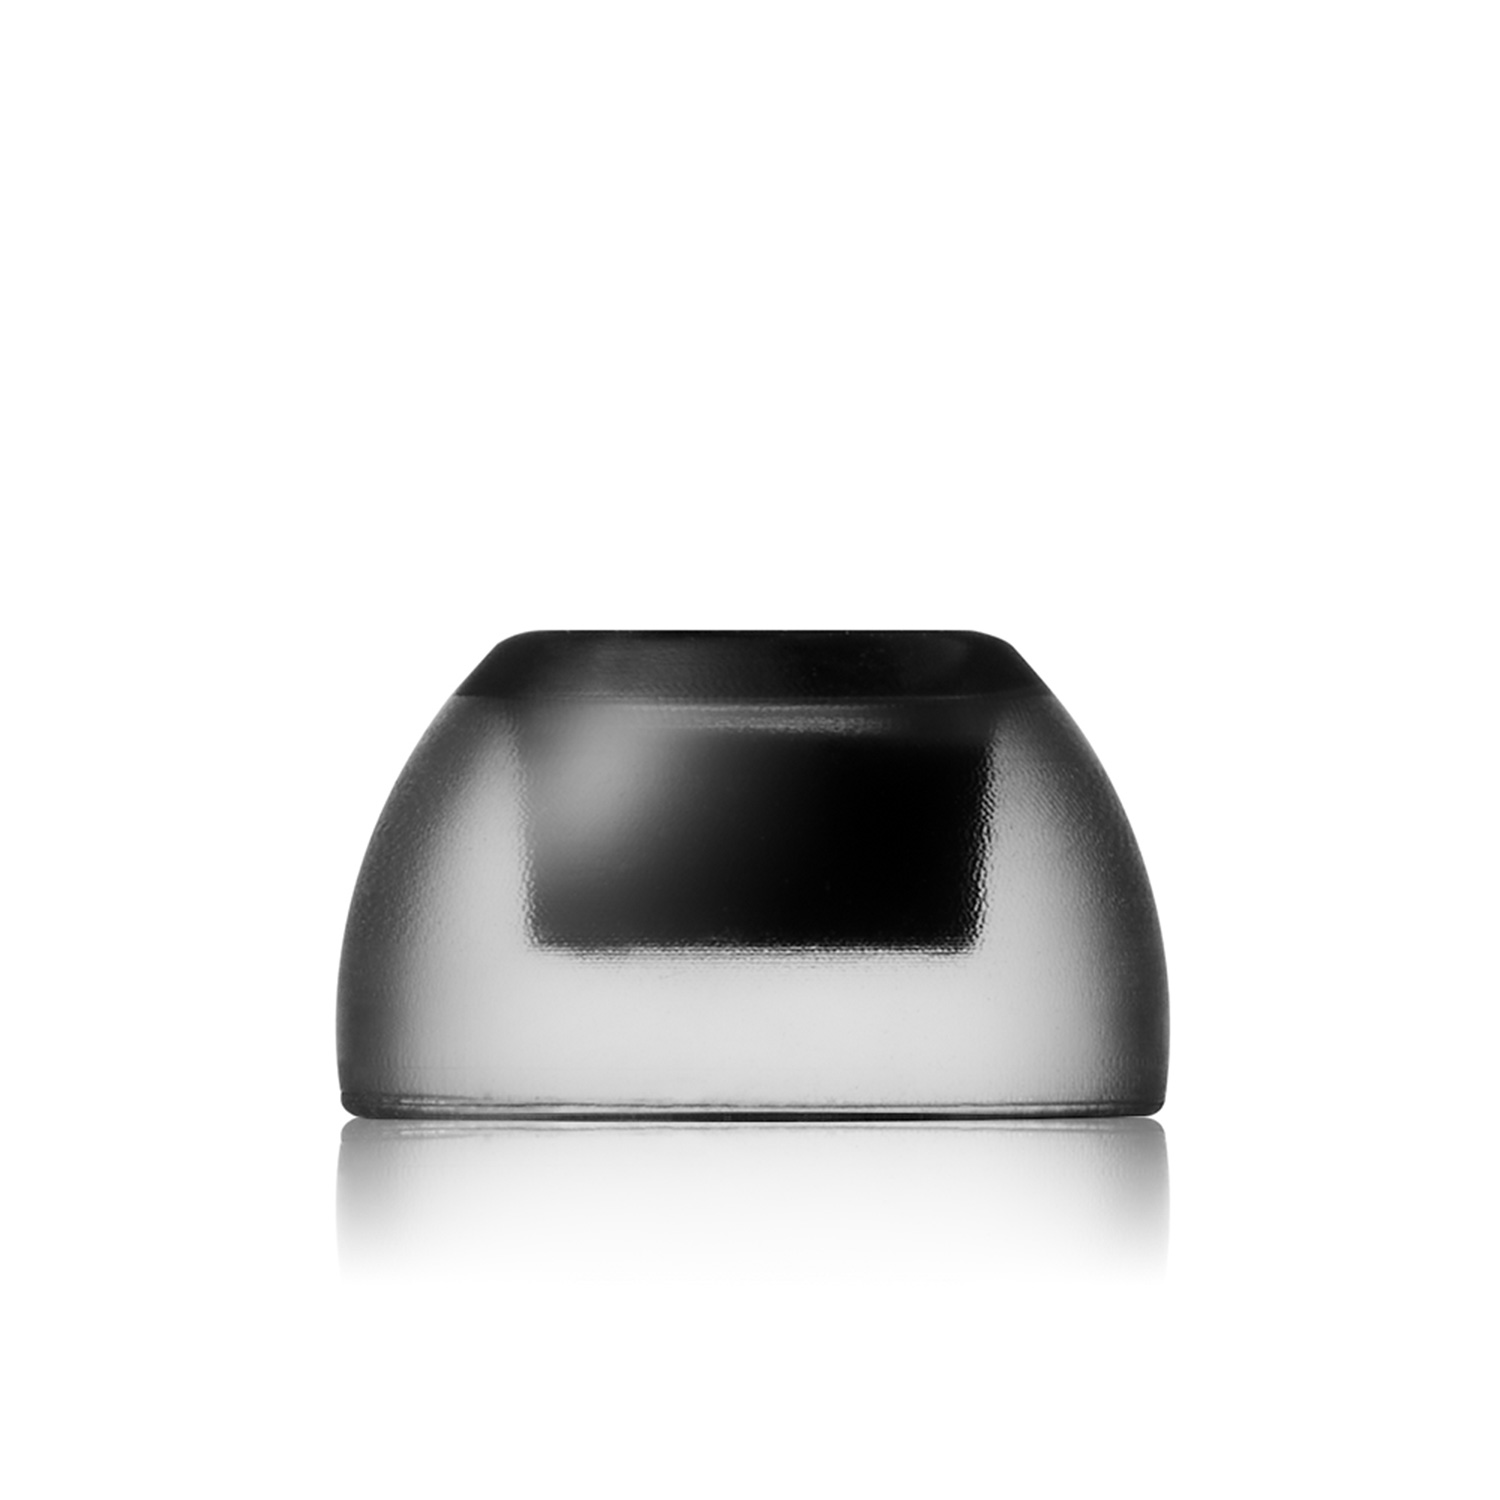 AZLA SednaEarfit Crystal für TWS 2 (Größe Transparent Paar Eartips SS)